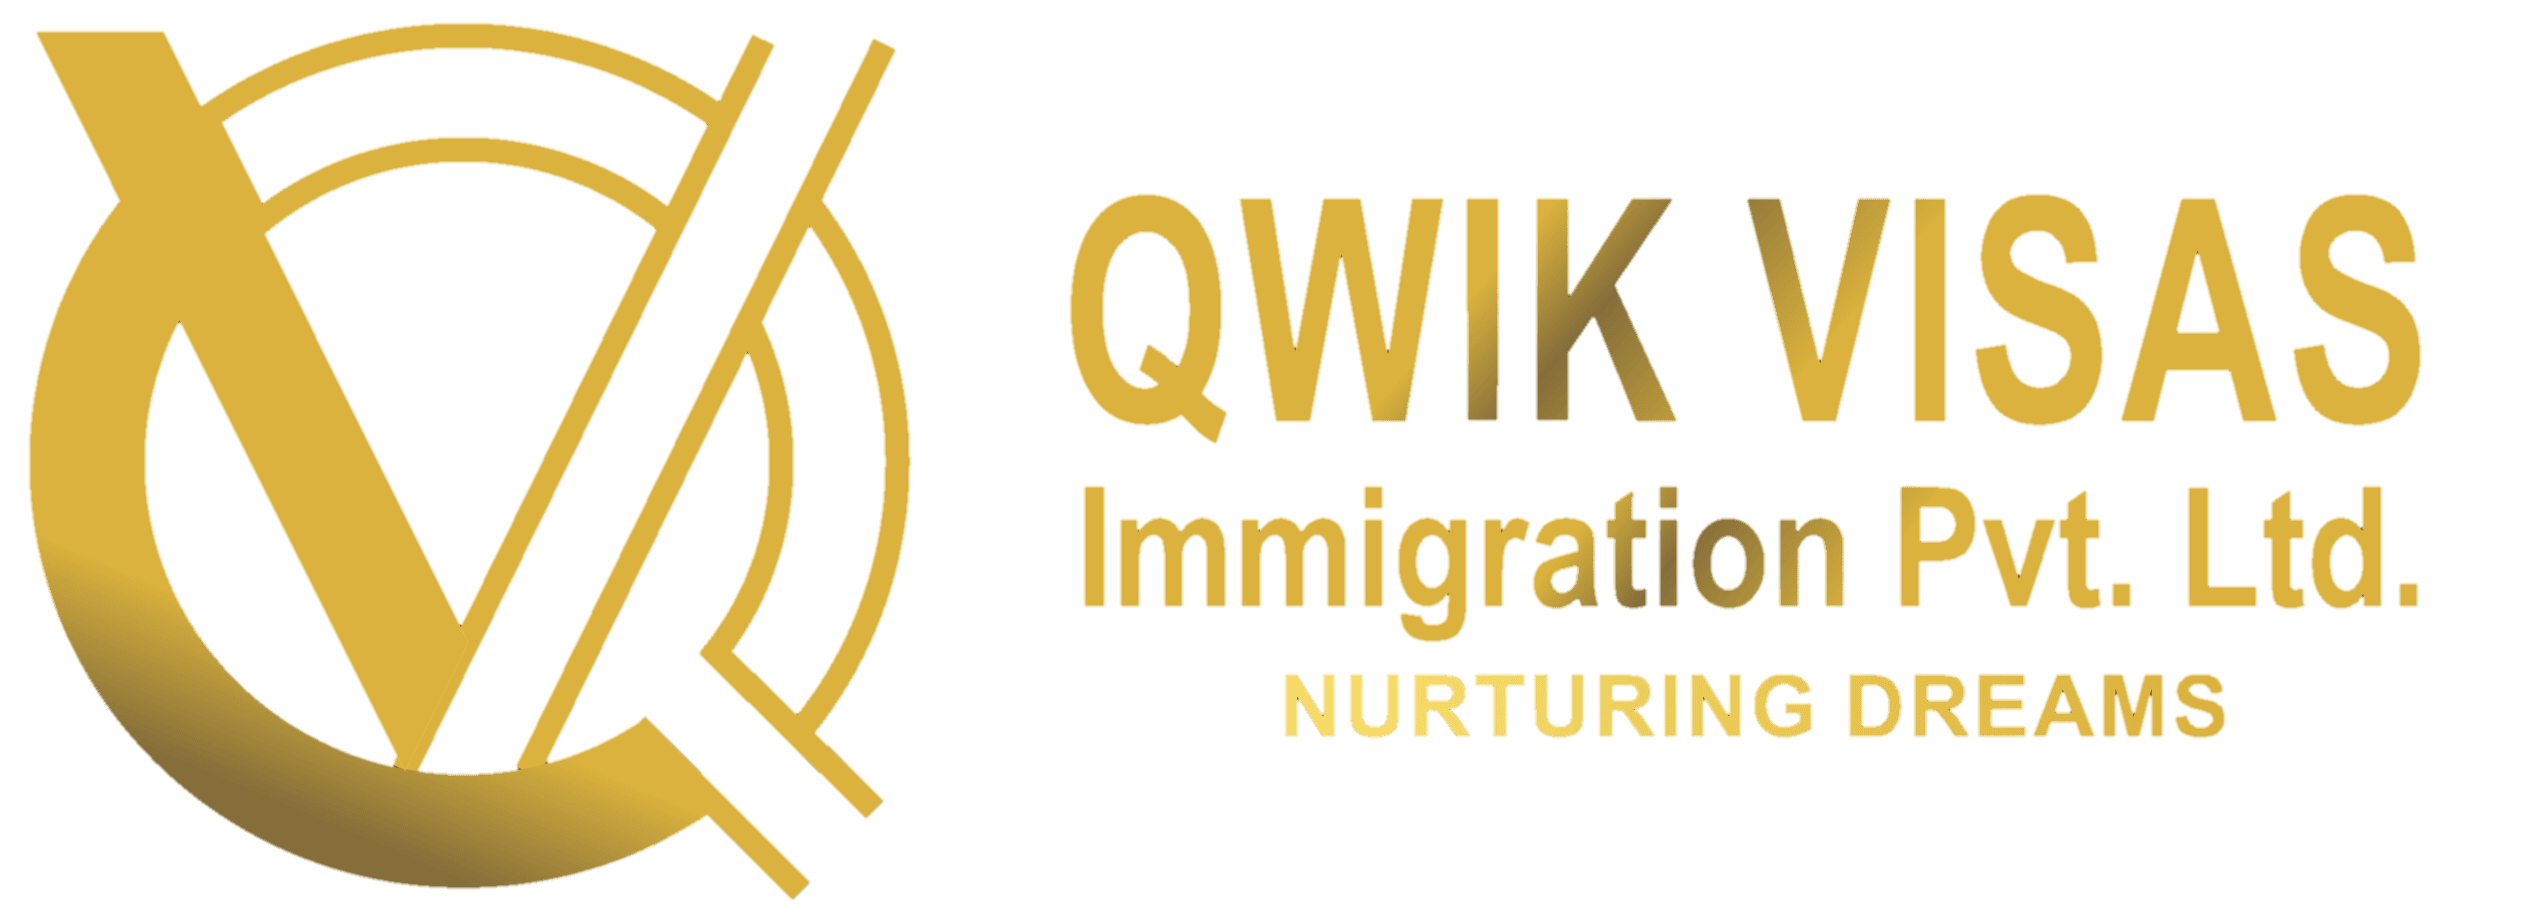 Qwik Visas Immigration Pvt. Ltd.